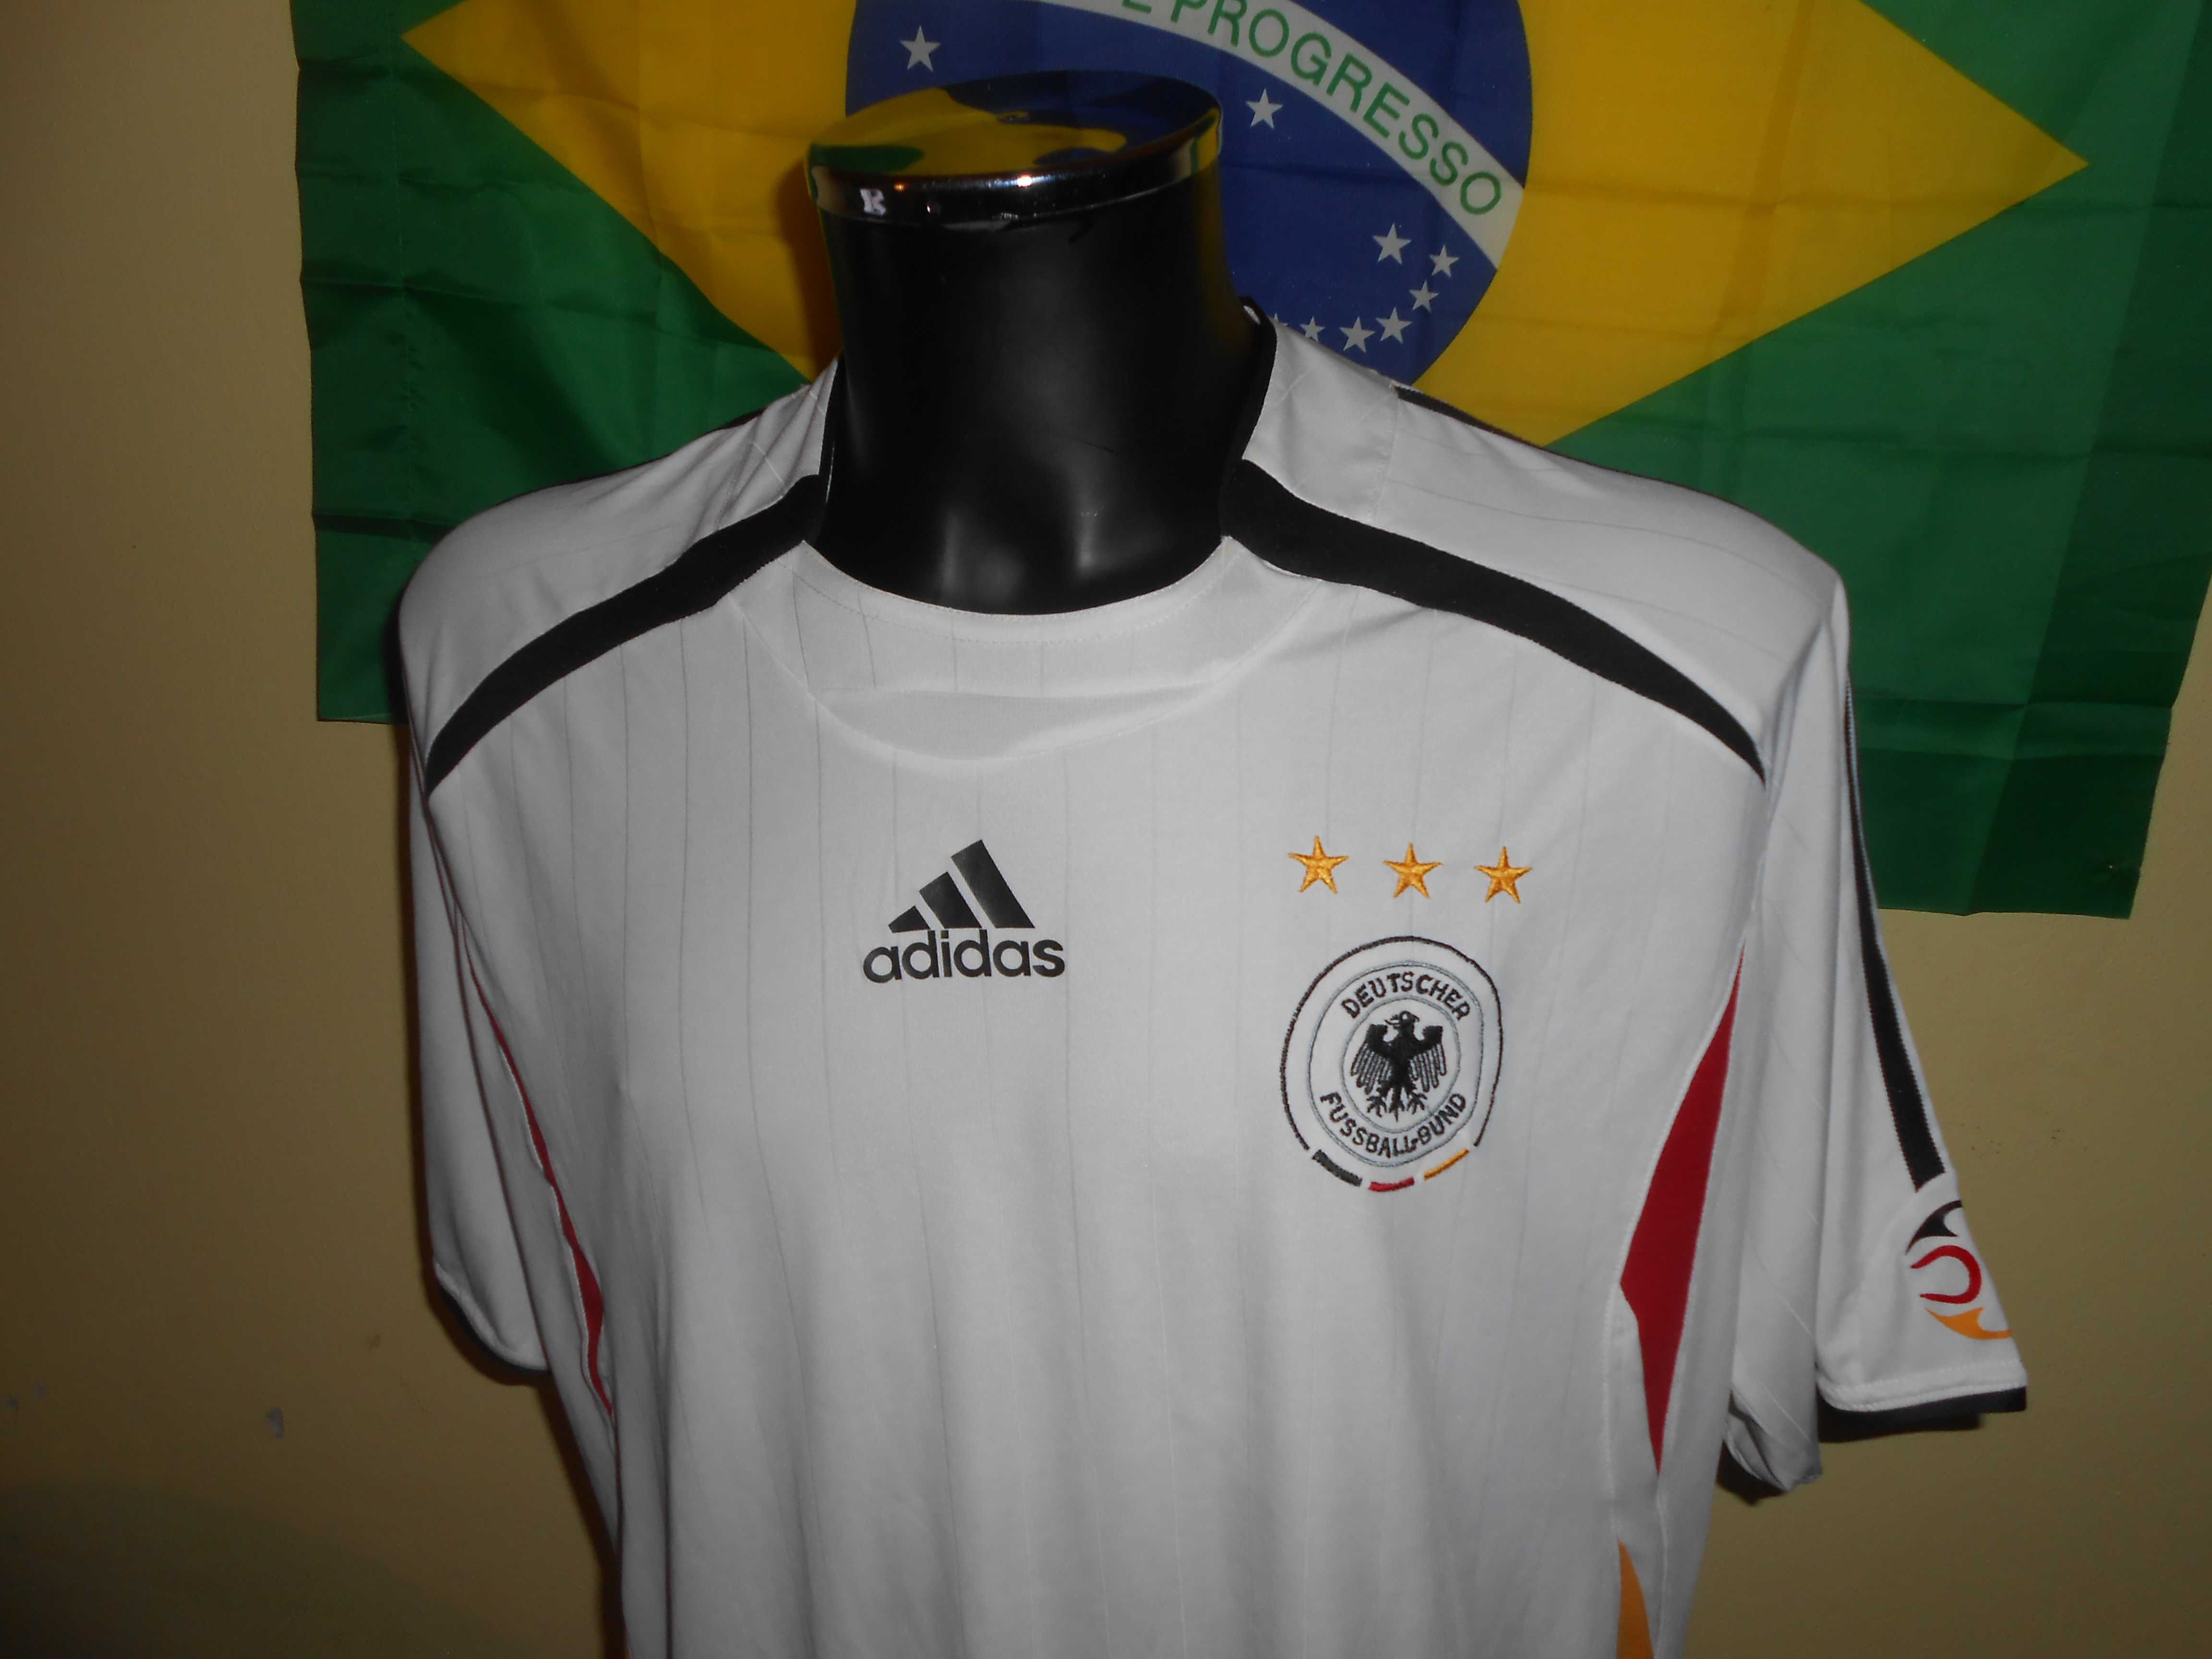 tricou germania DFB adidas model 2005 home kit  marimea XXXL